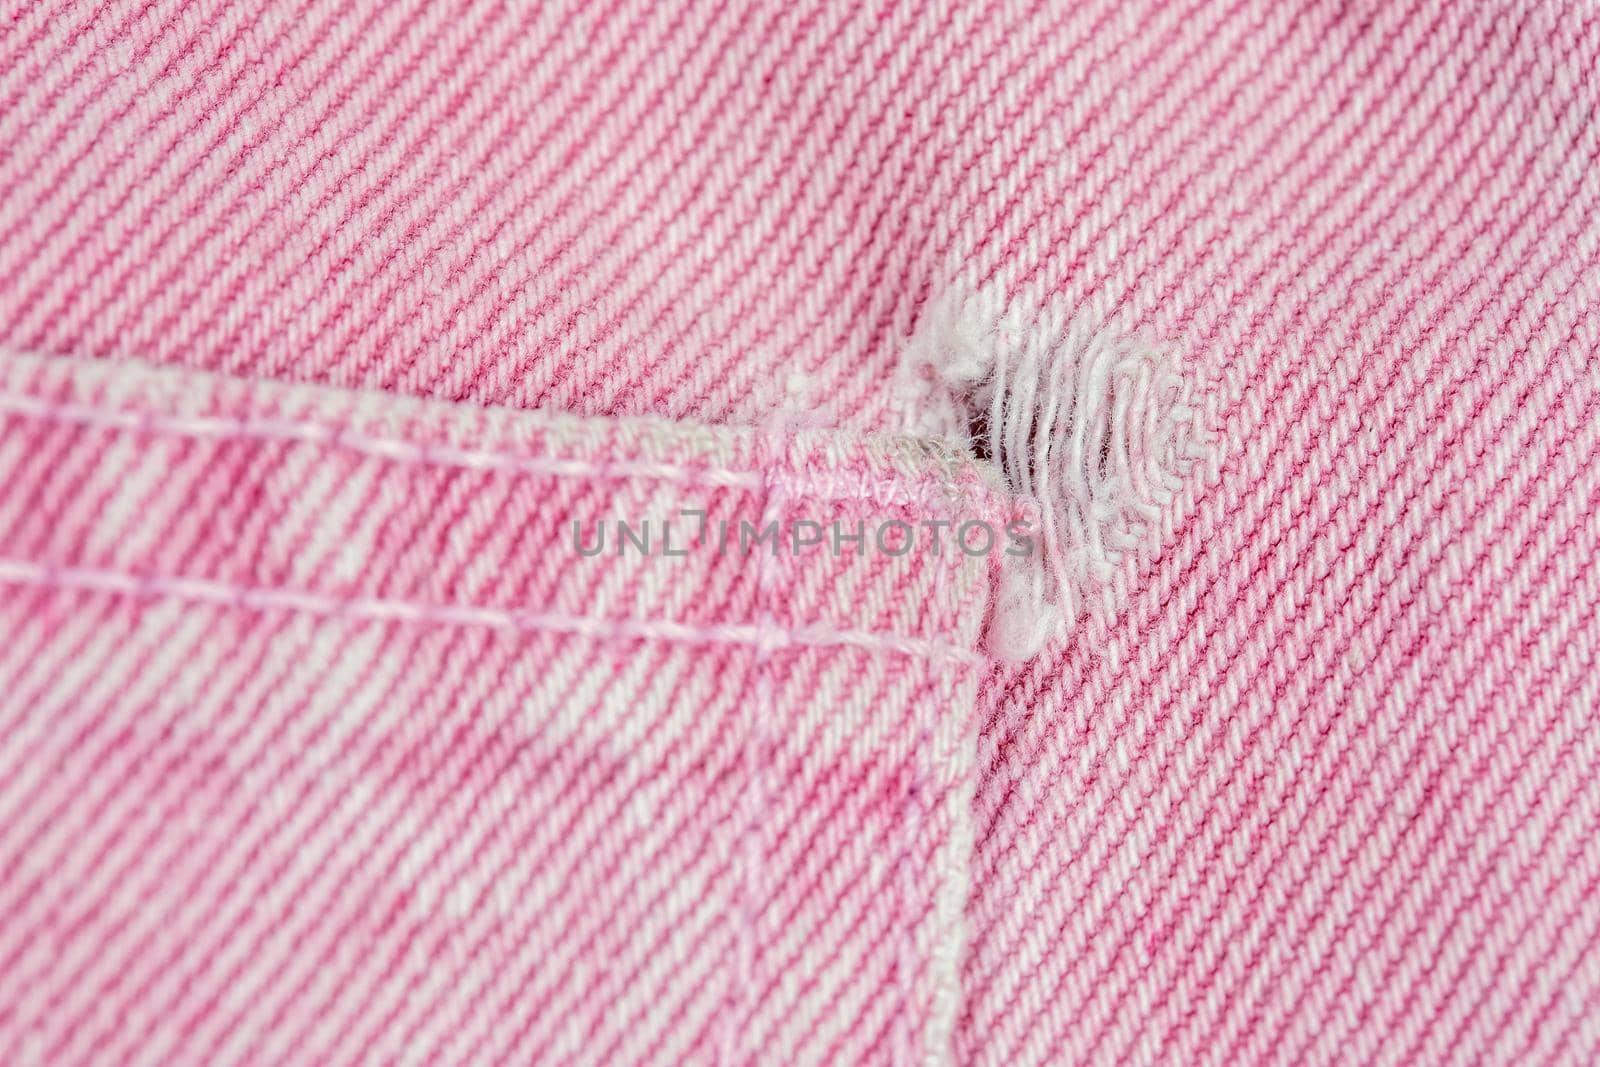 A close-up of a frayed pink jeans pocket, a torn off pocket.